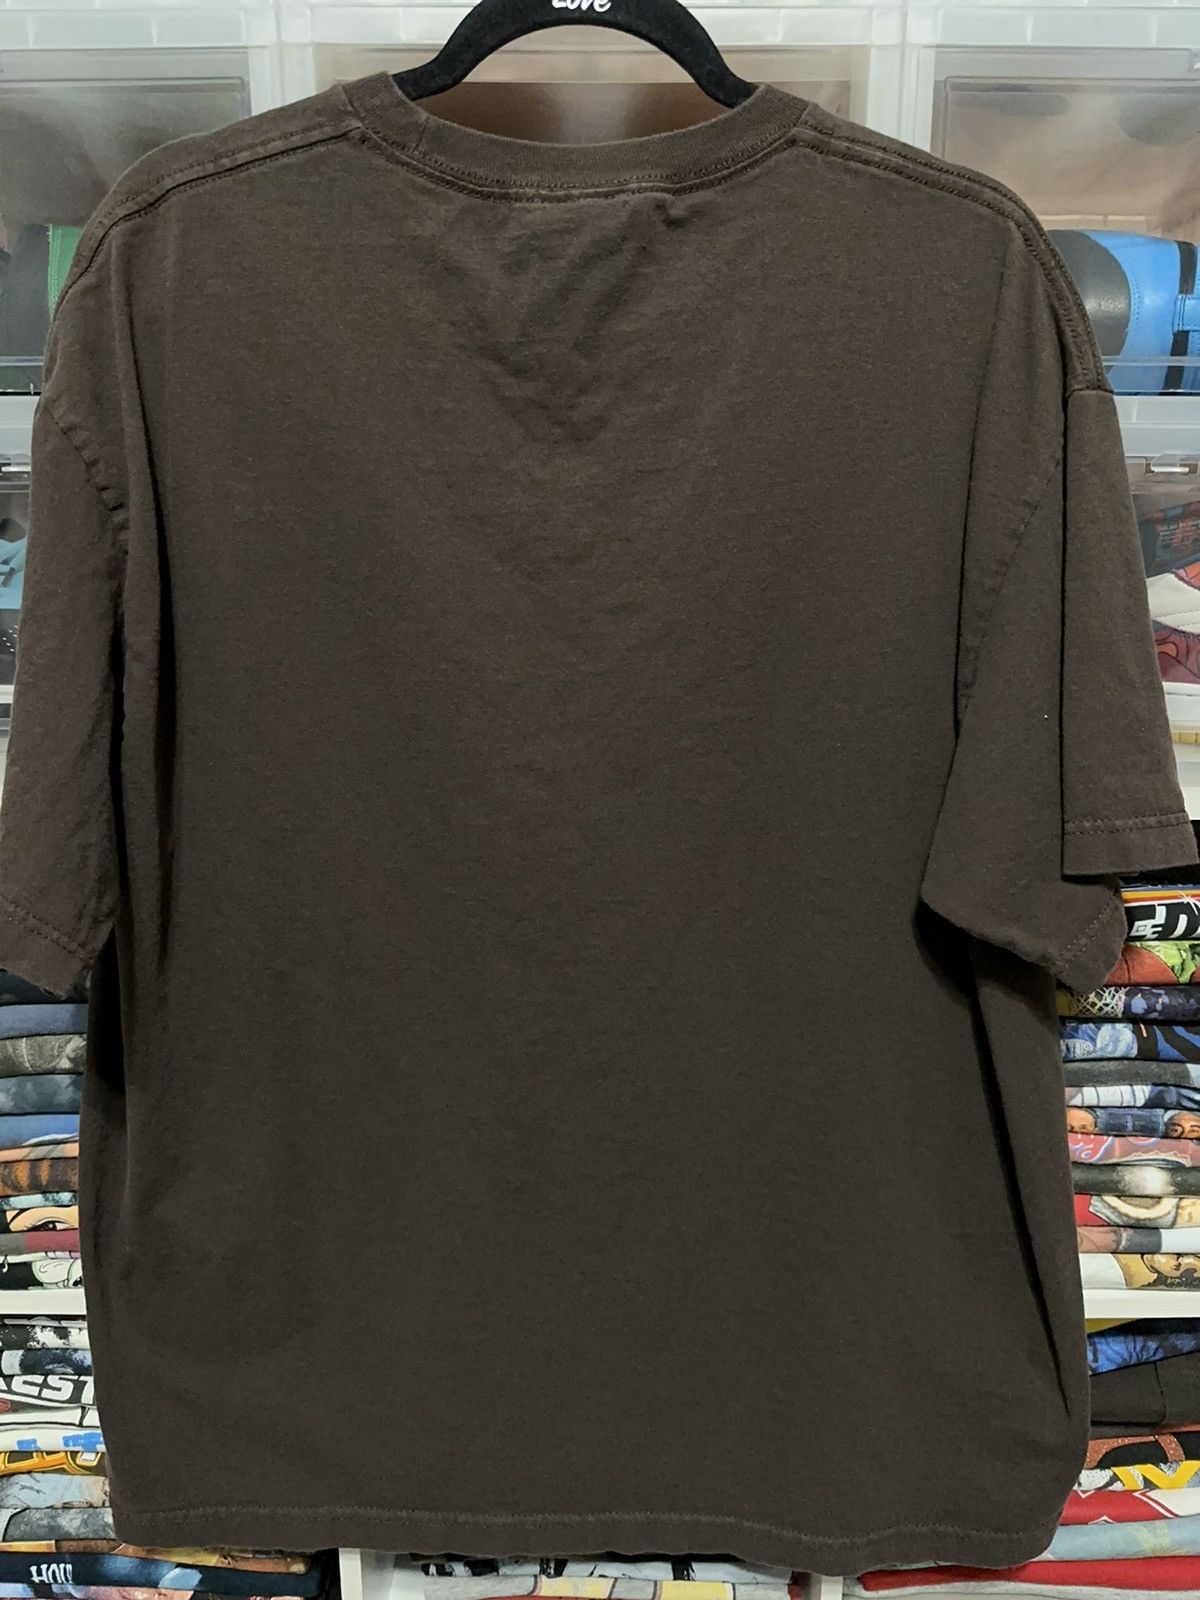 Vintage 2000s Nintendo Video Game Promo T-Shirt XL - 2